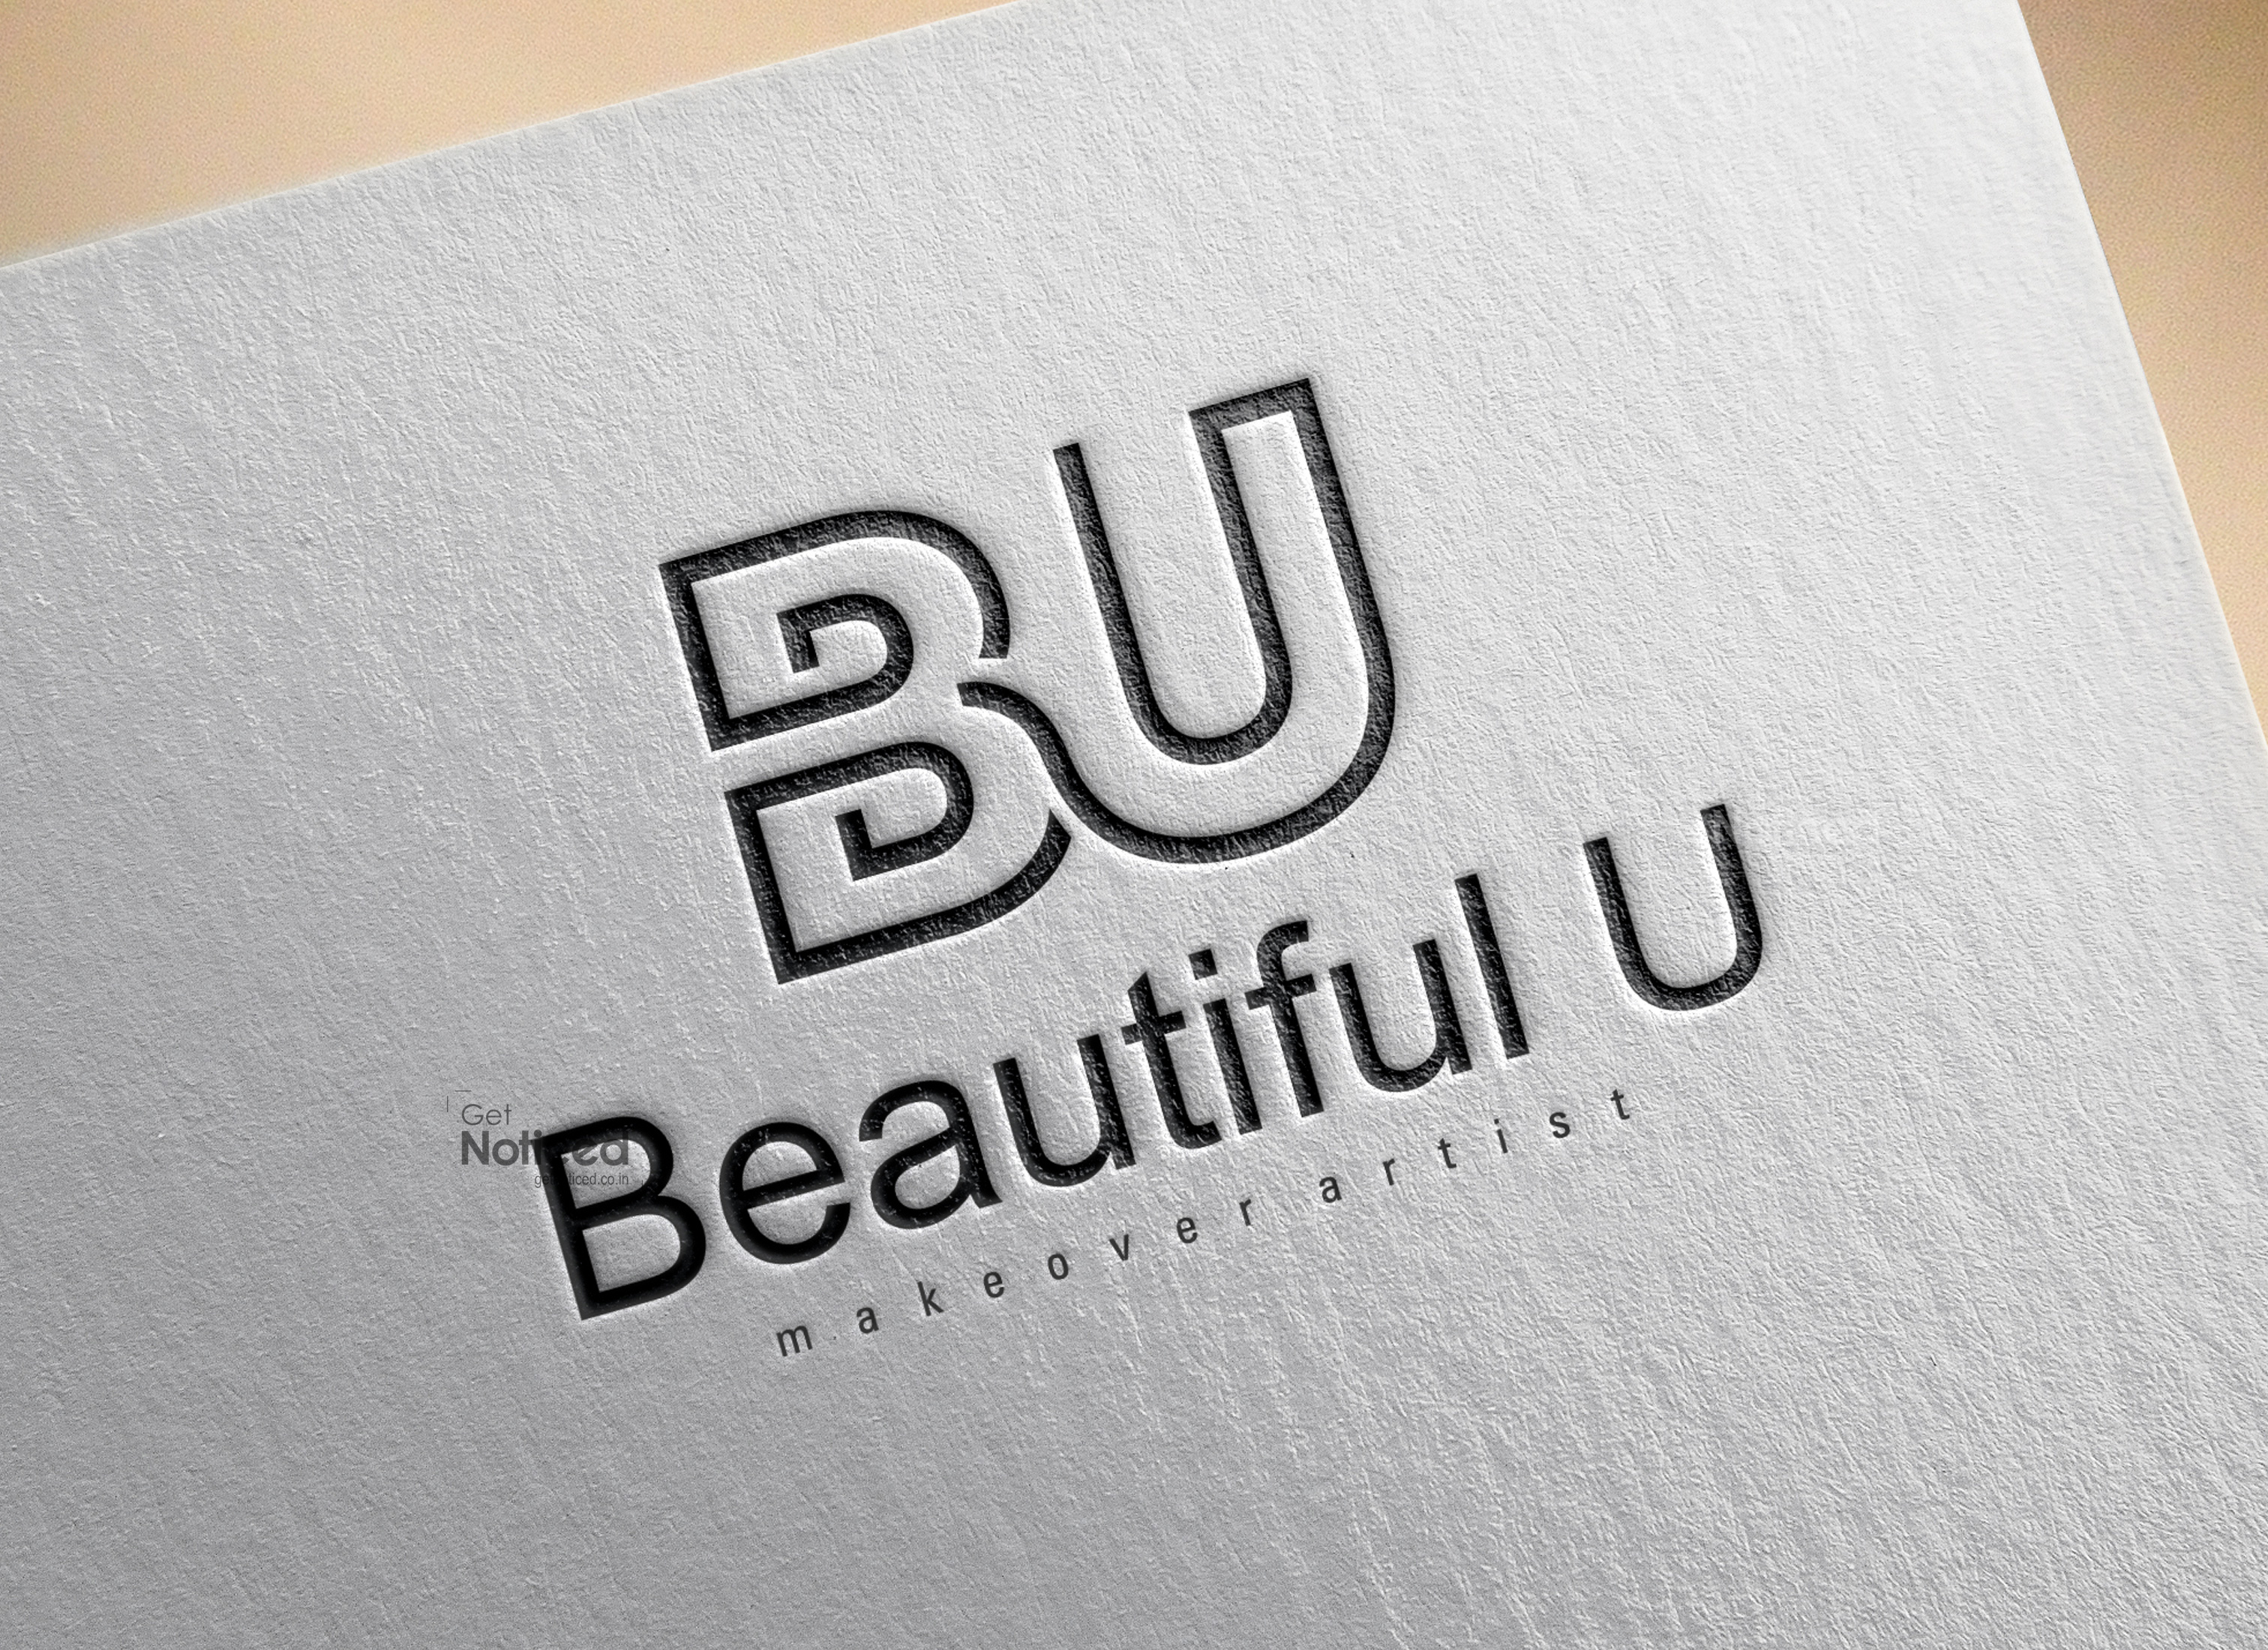 Beautiful U Logo Design